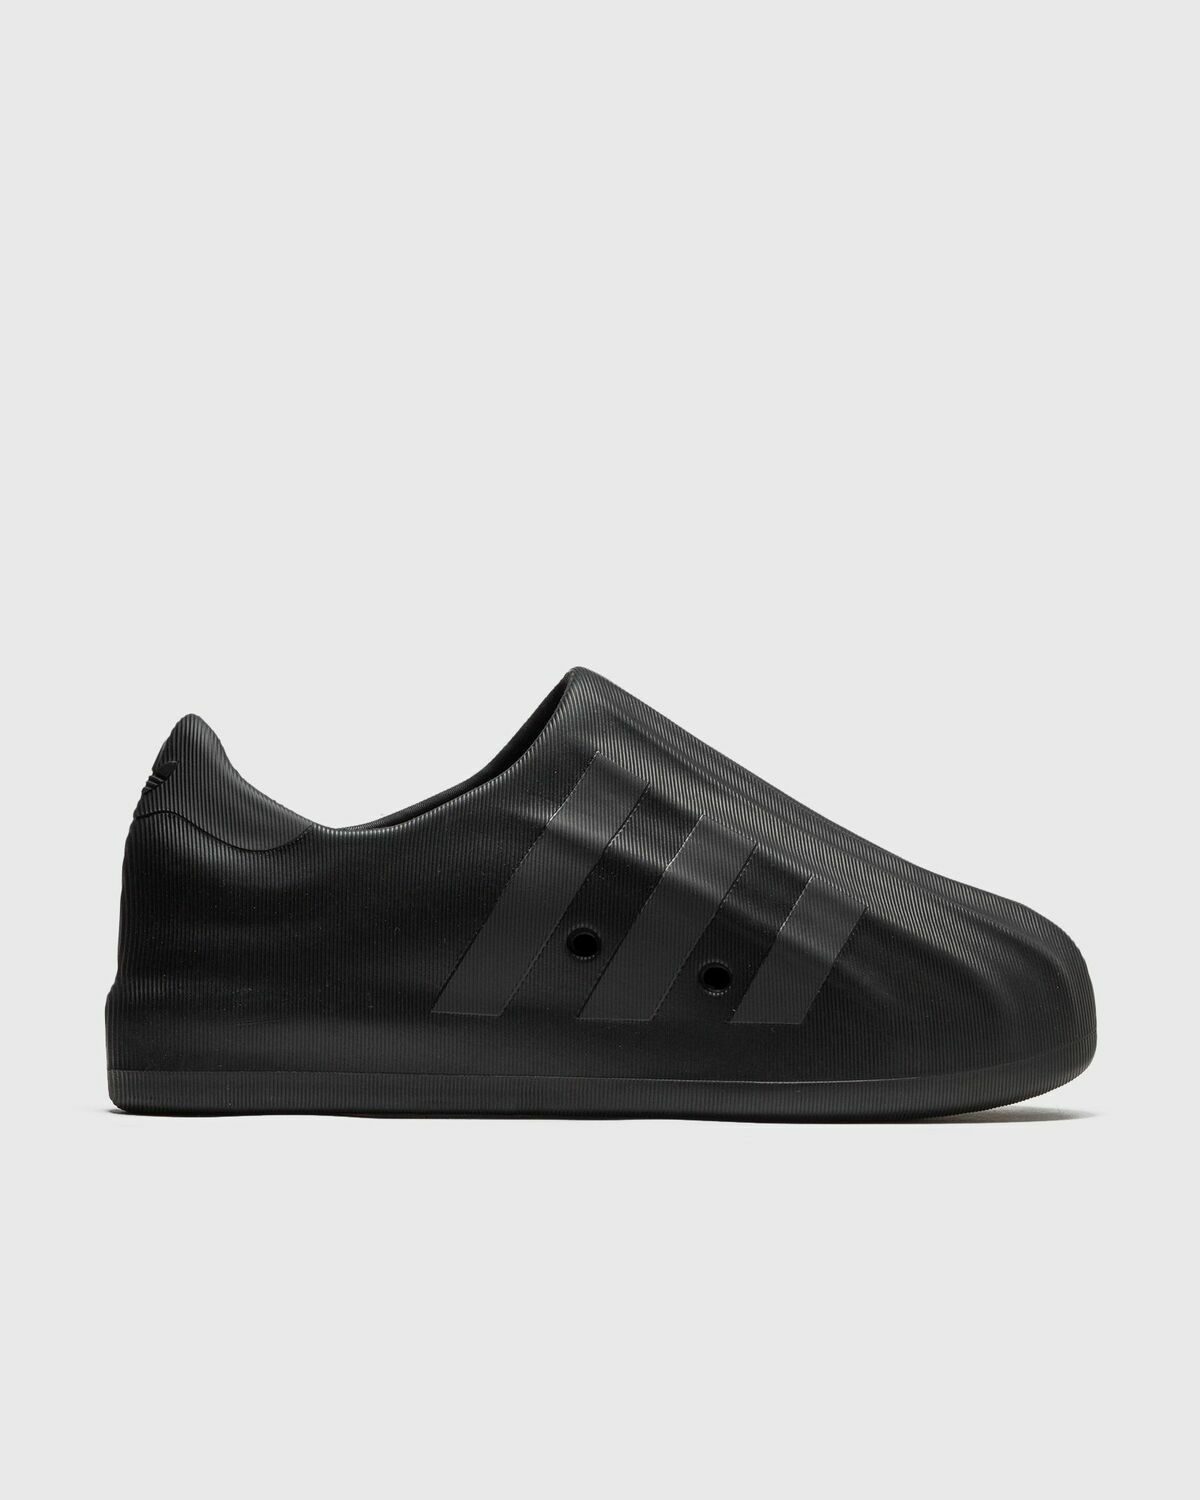 Adidas Adi Fom Superstar Black - Mens - Lowtop adidas